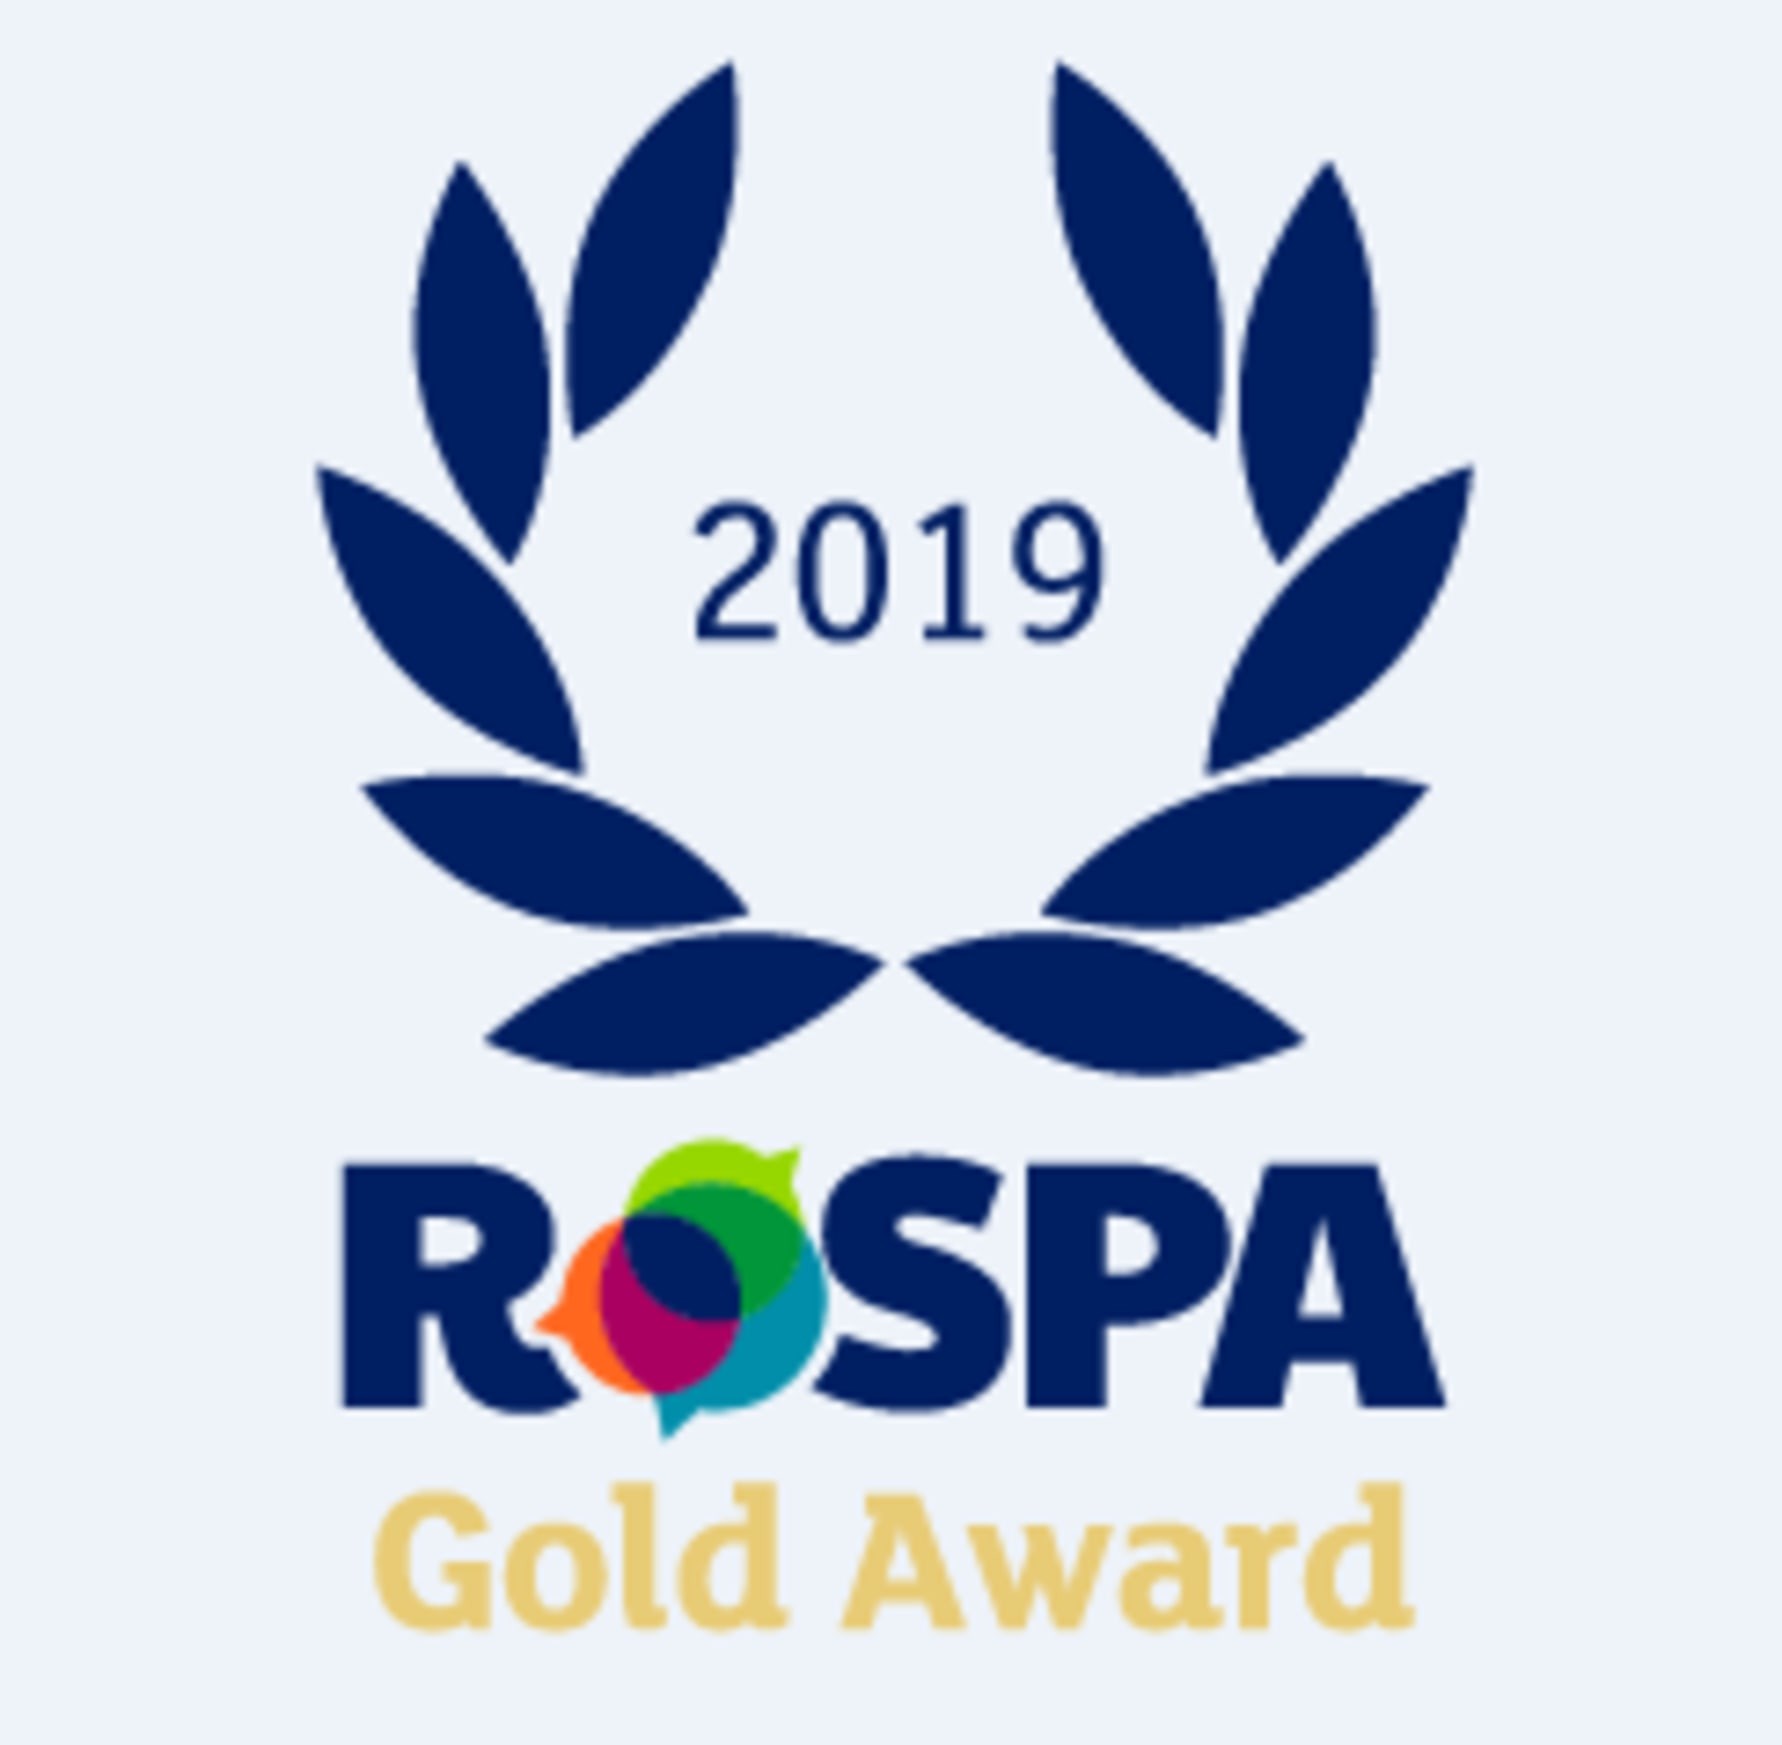 RoSPA Gold Award for West Midlands Railway and London Northwestern Railway